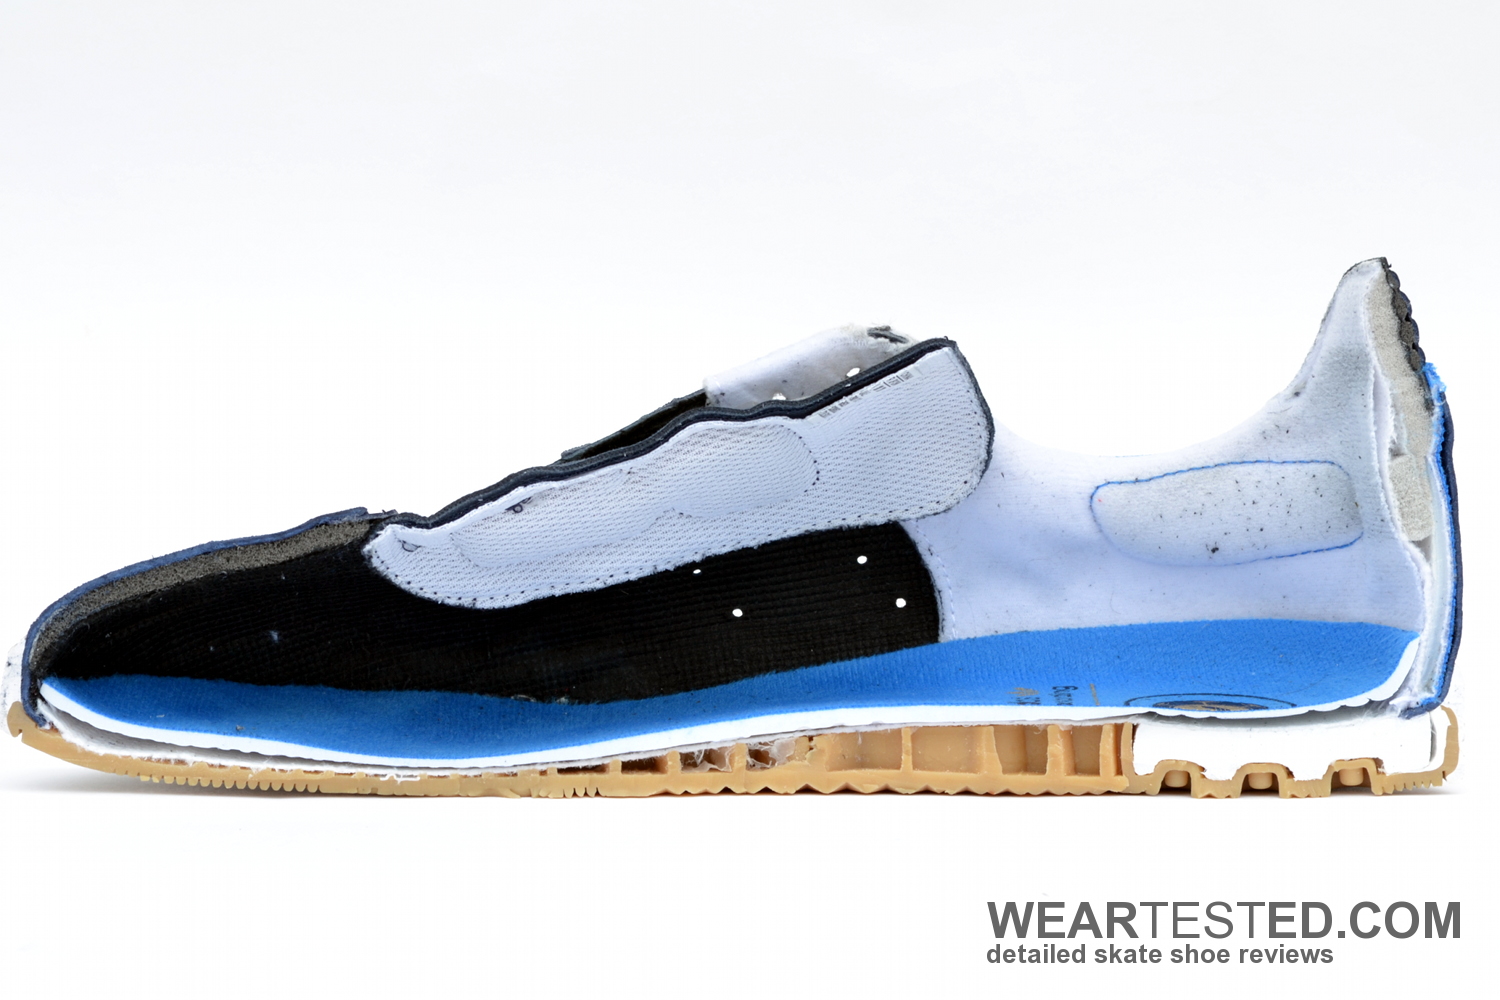 adidas Busenitz ADV Weartested - skate shoe reviews